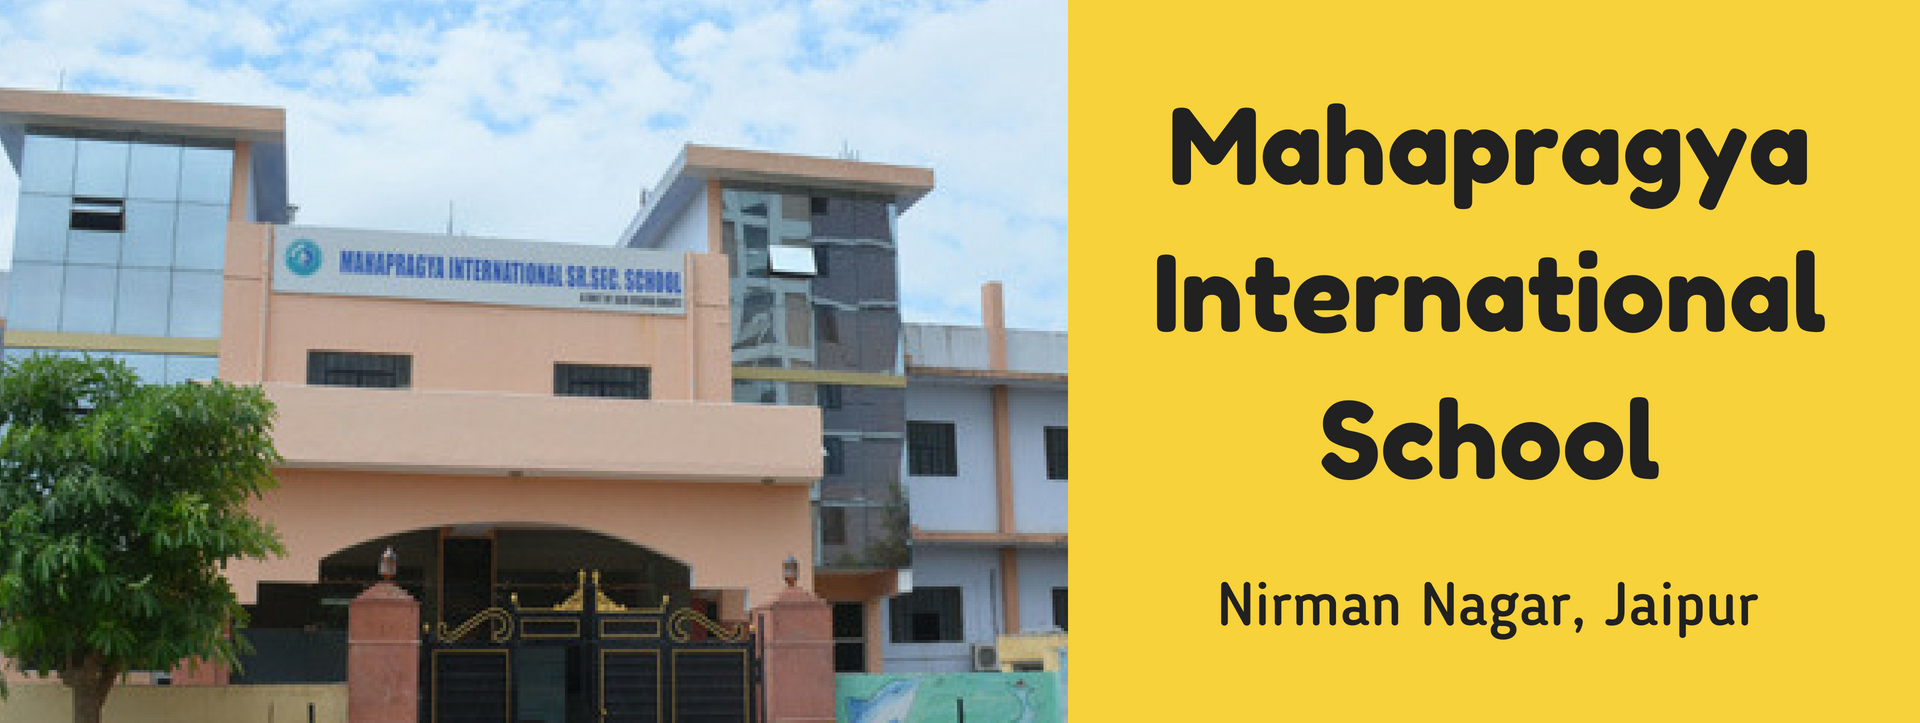 Mahapragya International School, Jaipur